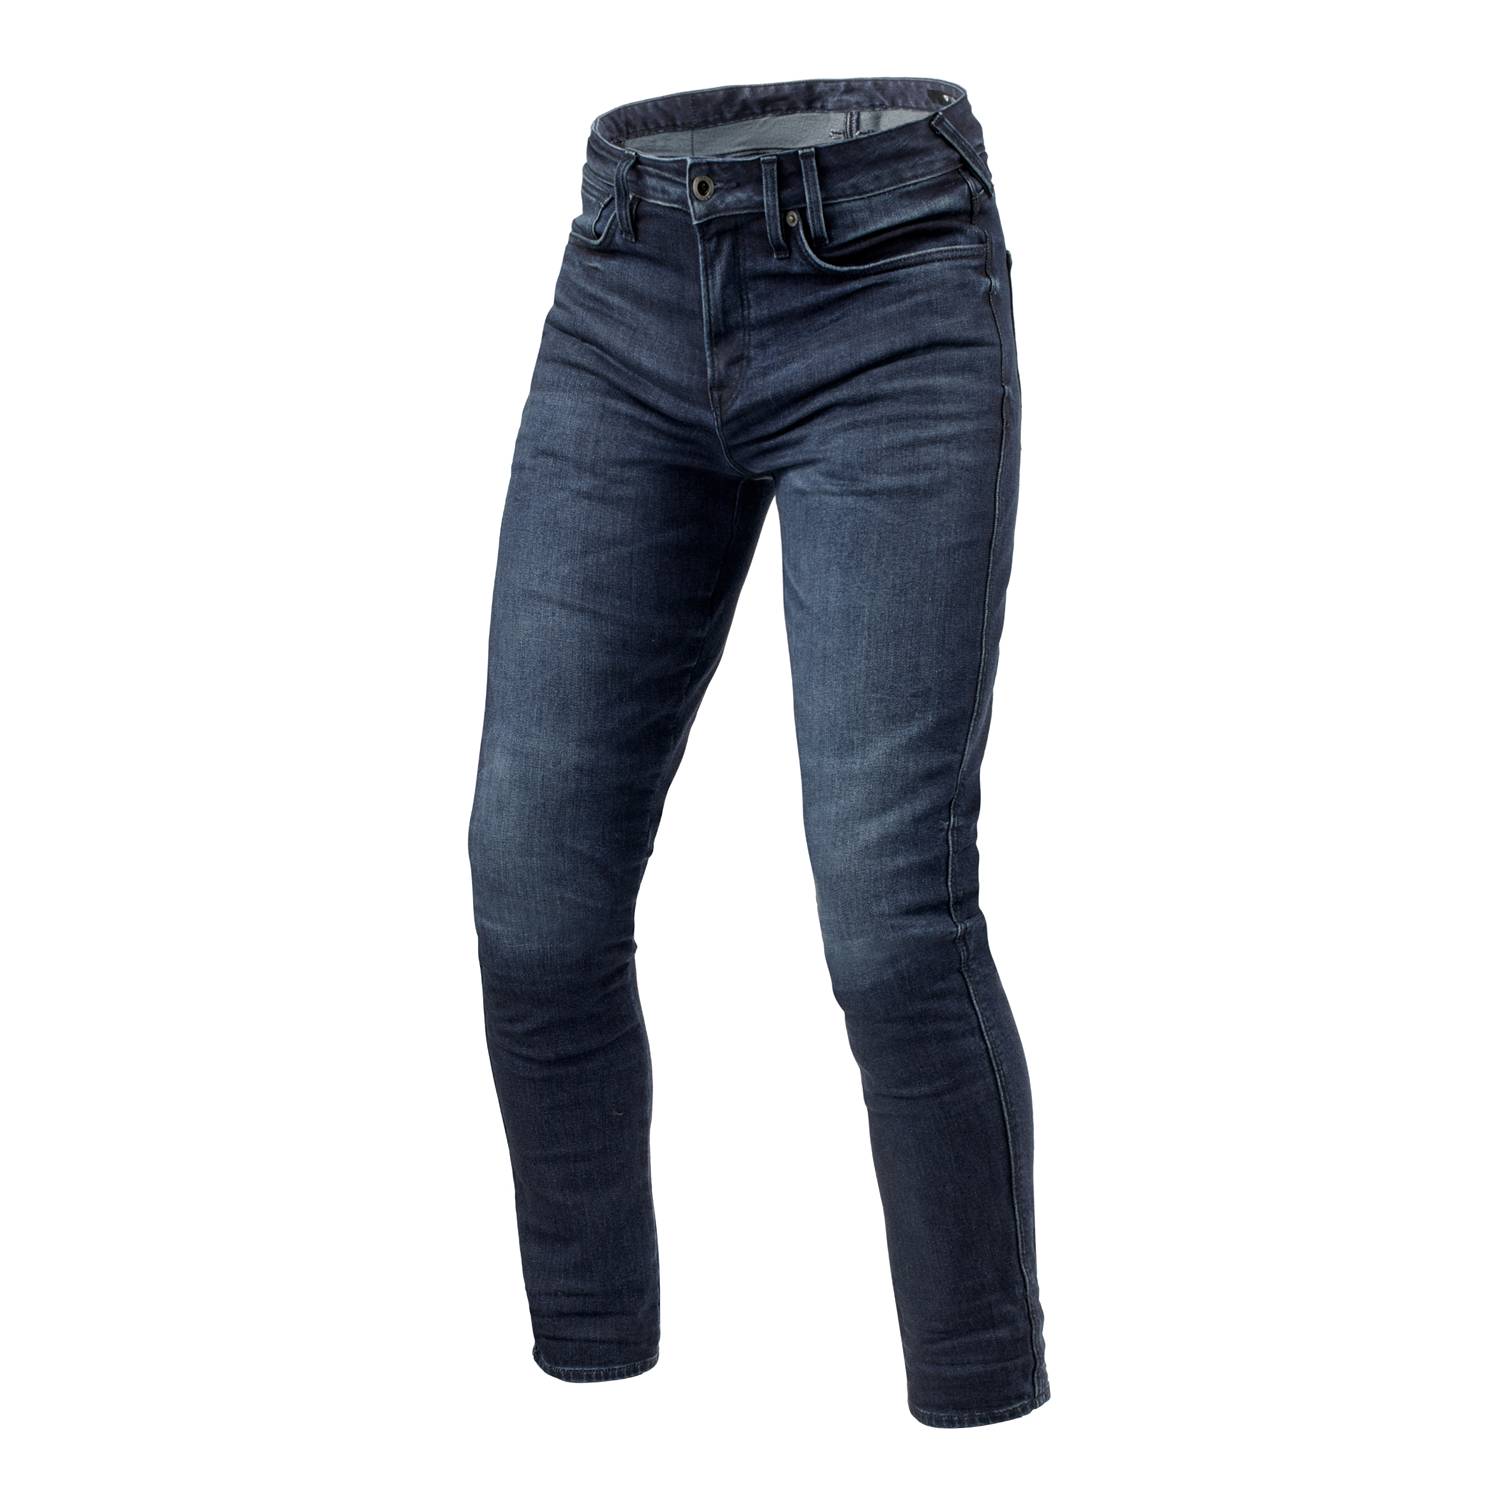 Image of REV'IT! Jeans Carlin SK Dark Blue Used L32 Motorcycle Jeans Größe L32/W30